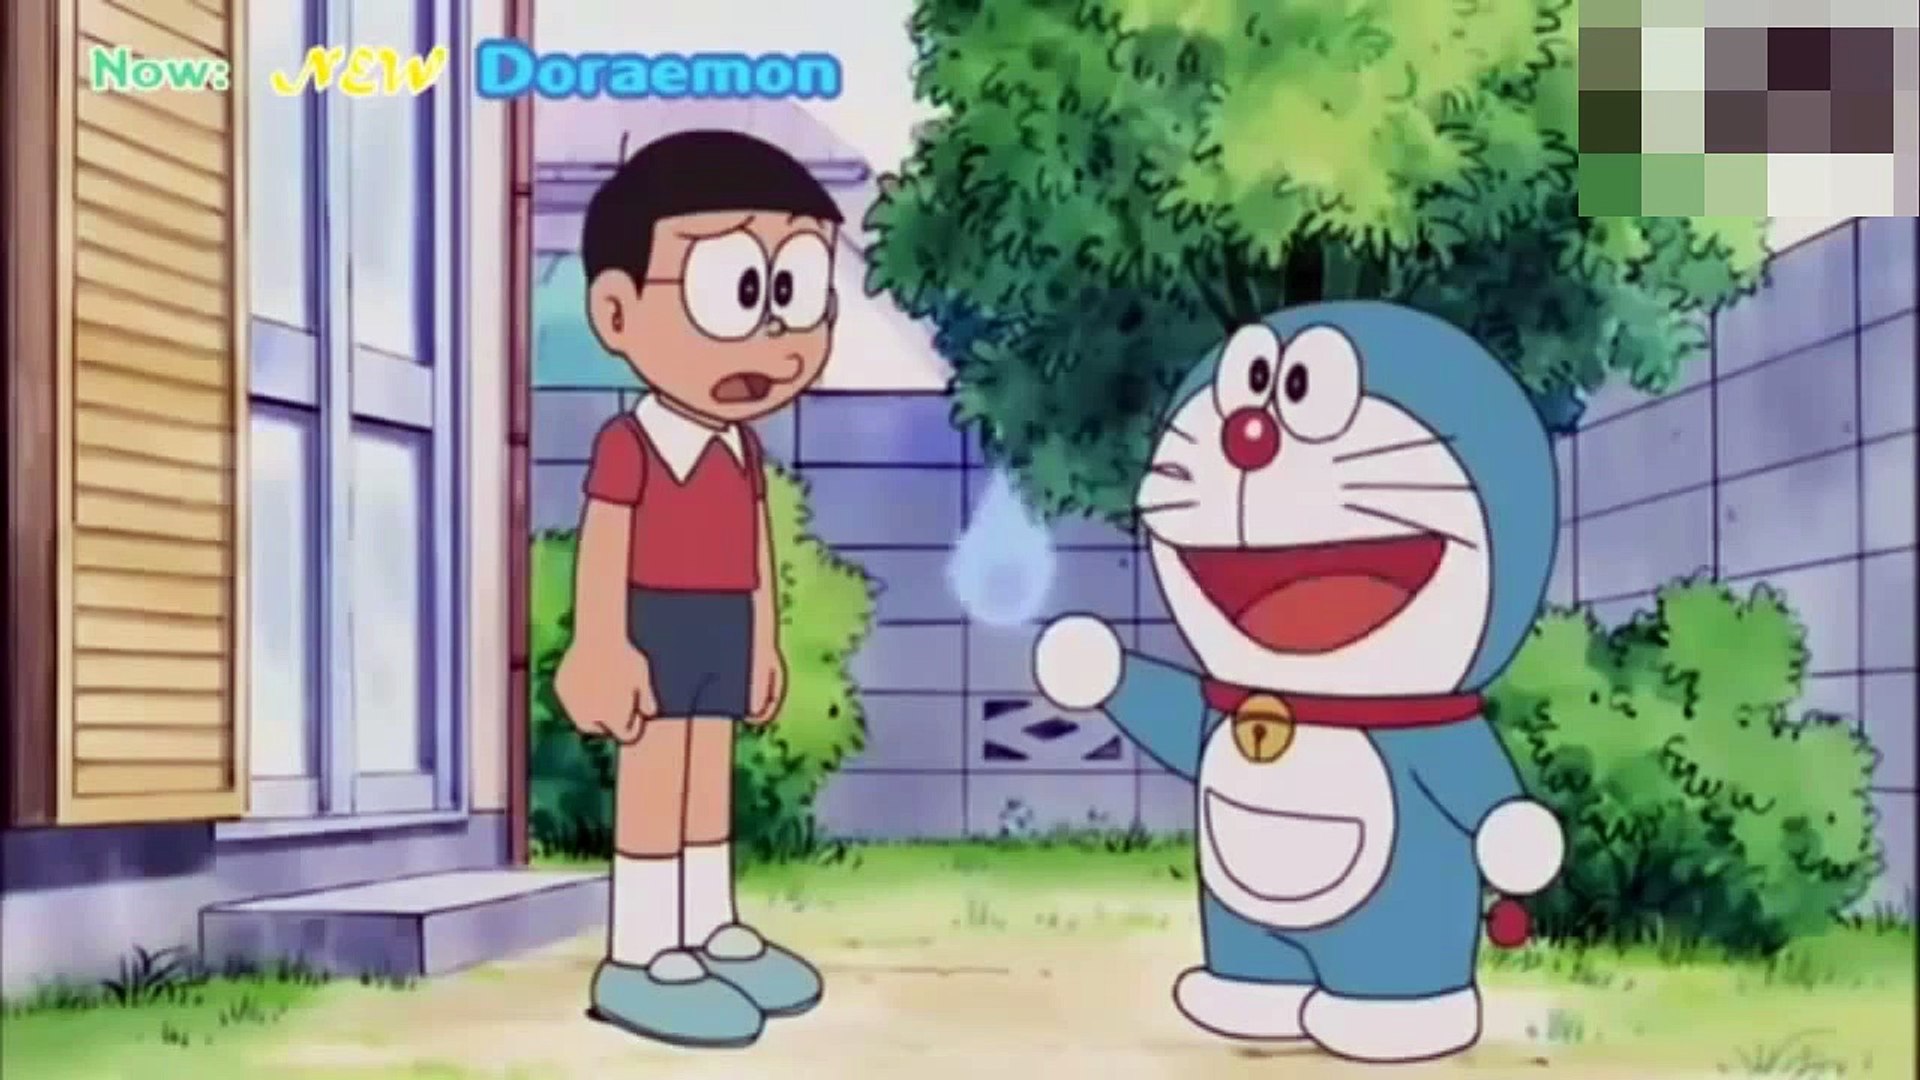 Doraemon New Episods (The horror story) - video Dailymotion